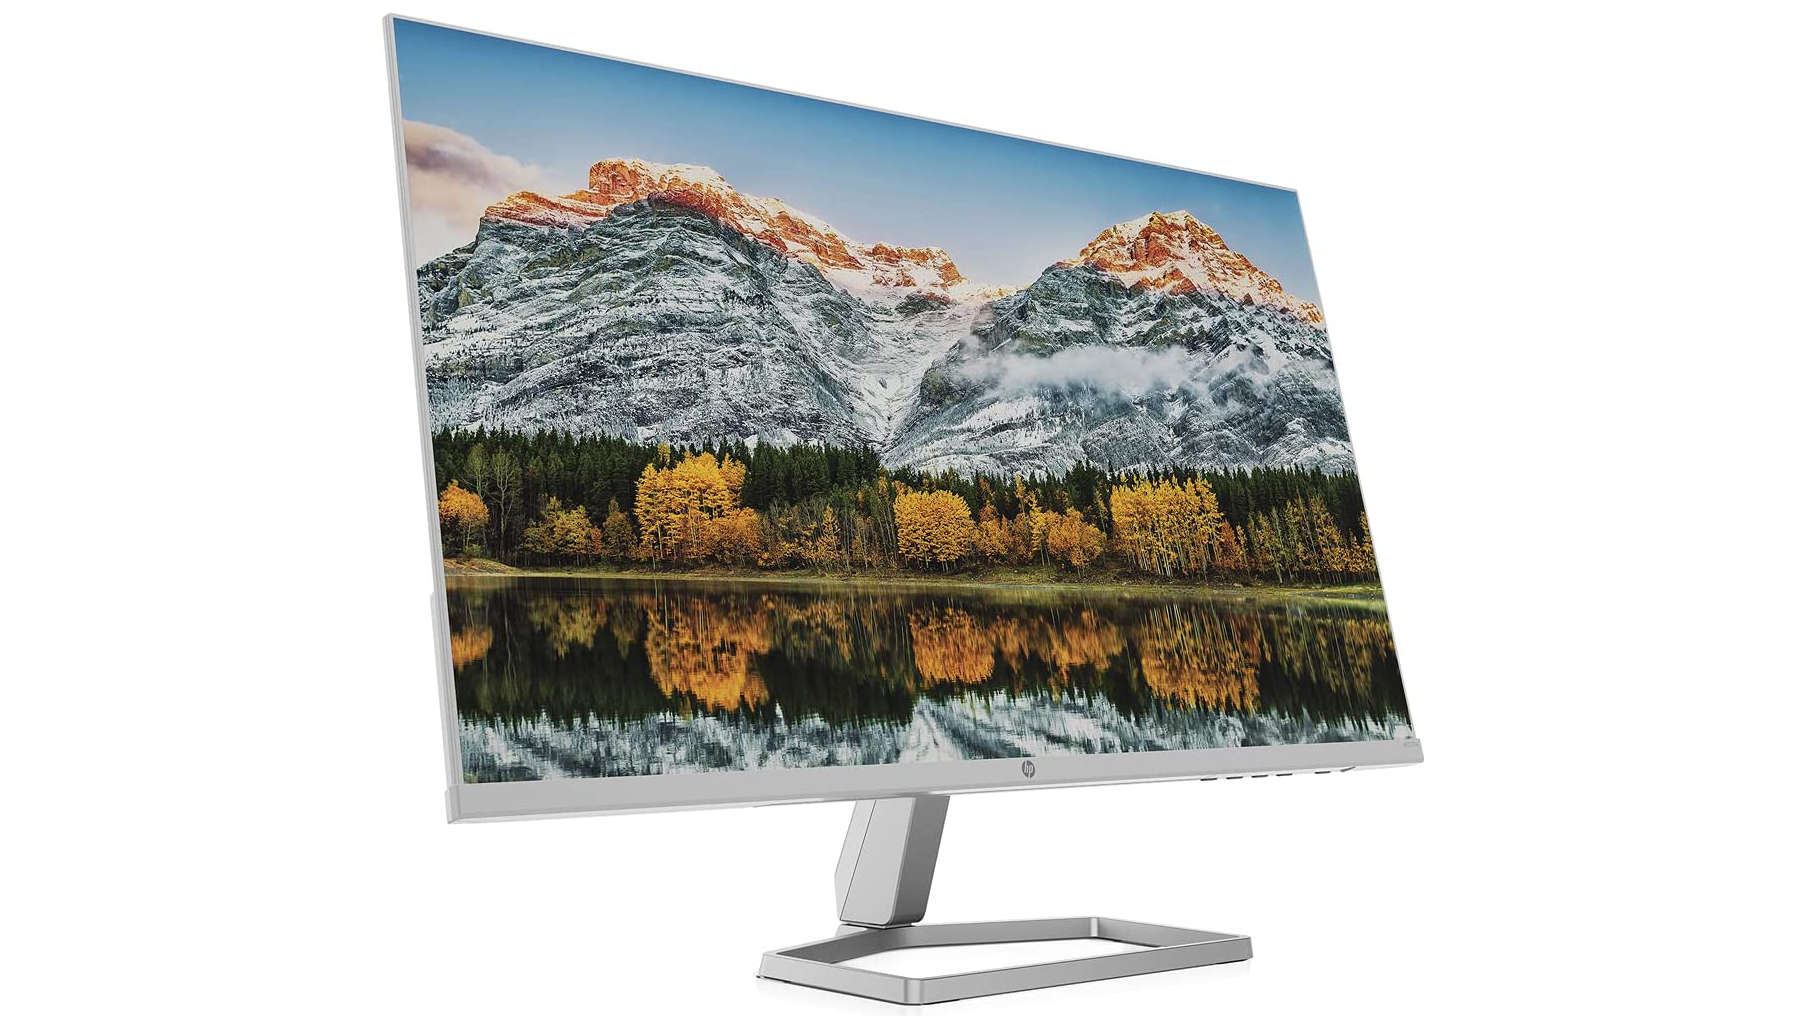 HP M27f - The best 27-inch monitors